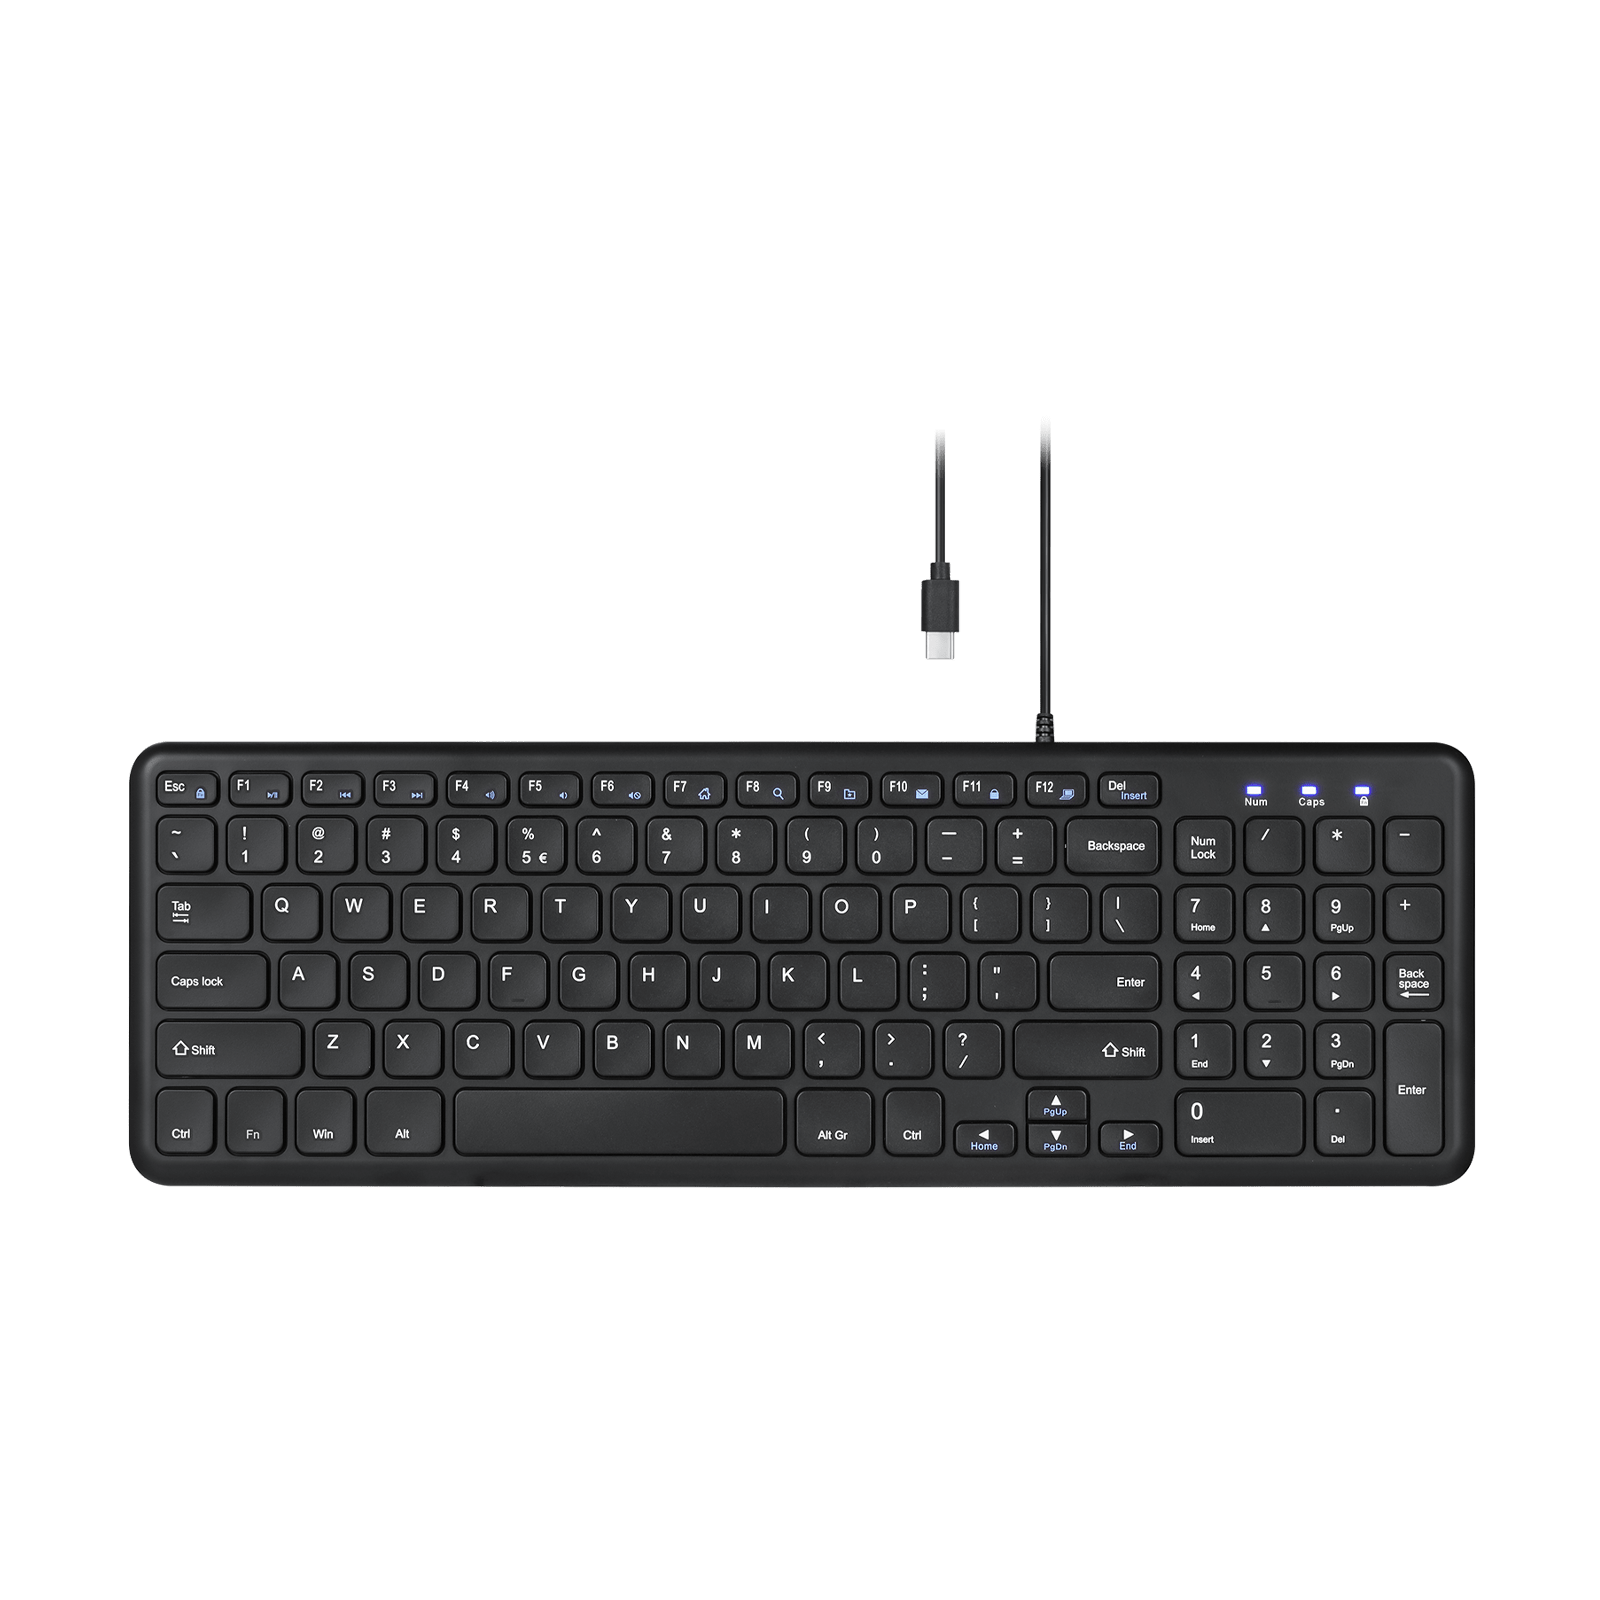 PERIBOARD-213 C - Wired USB Type C - Compact 90% Keyboard - Quiet Scissor Keys - Perixx Europe